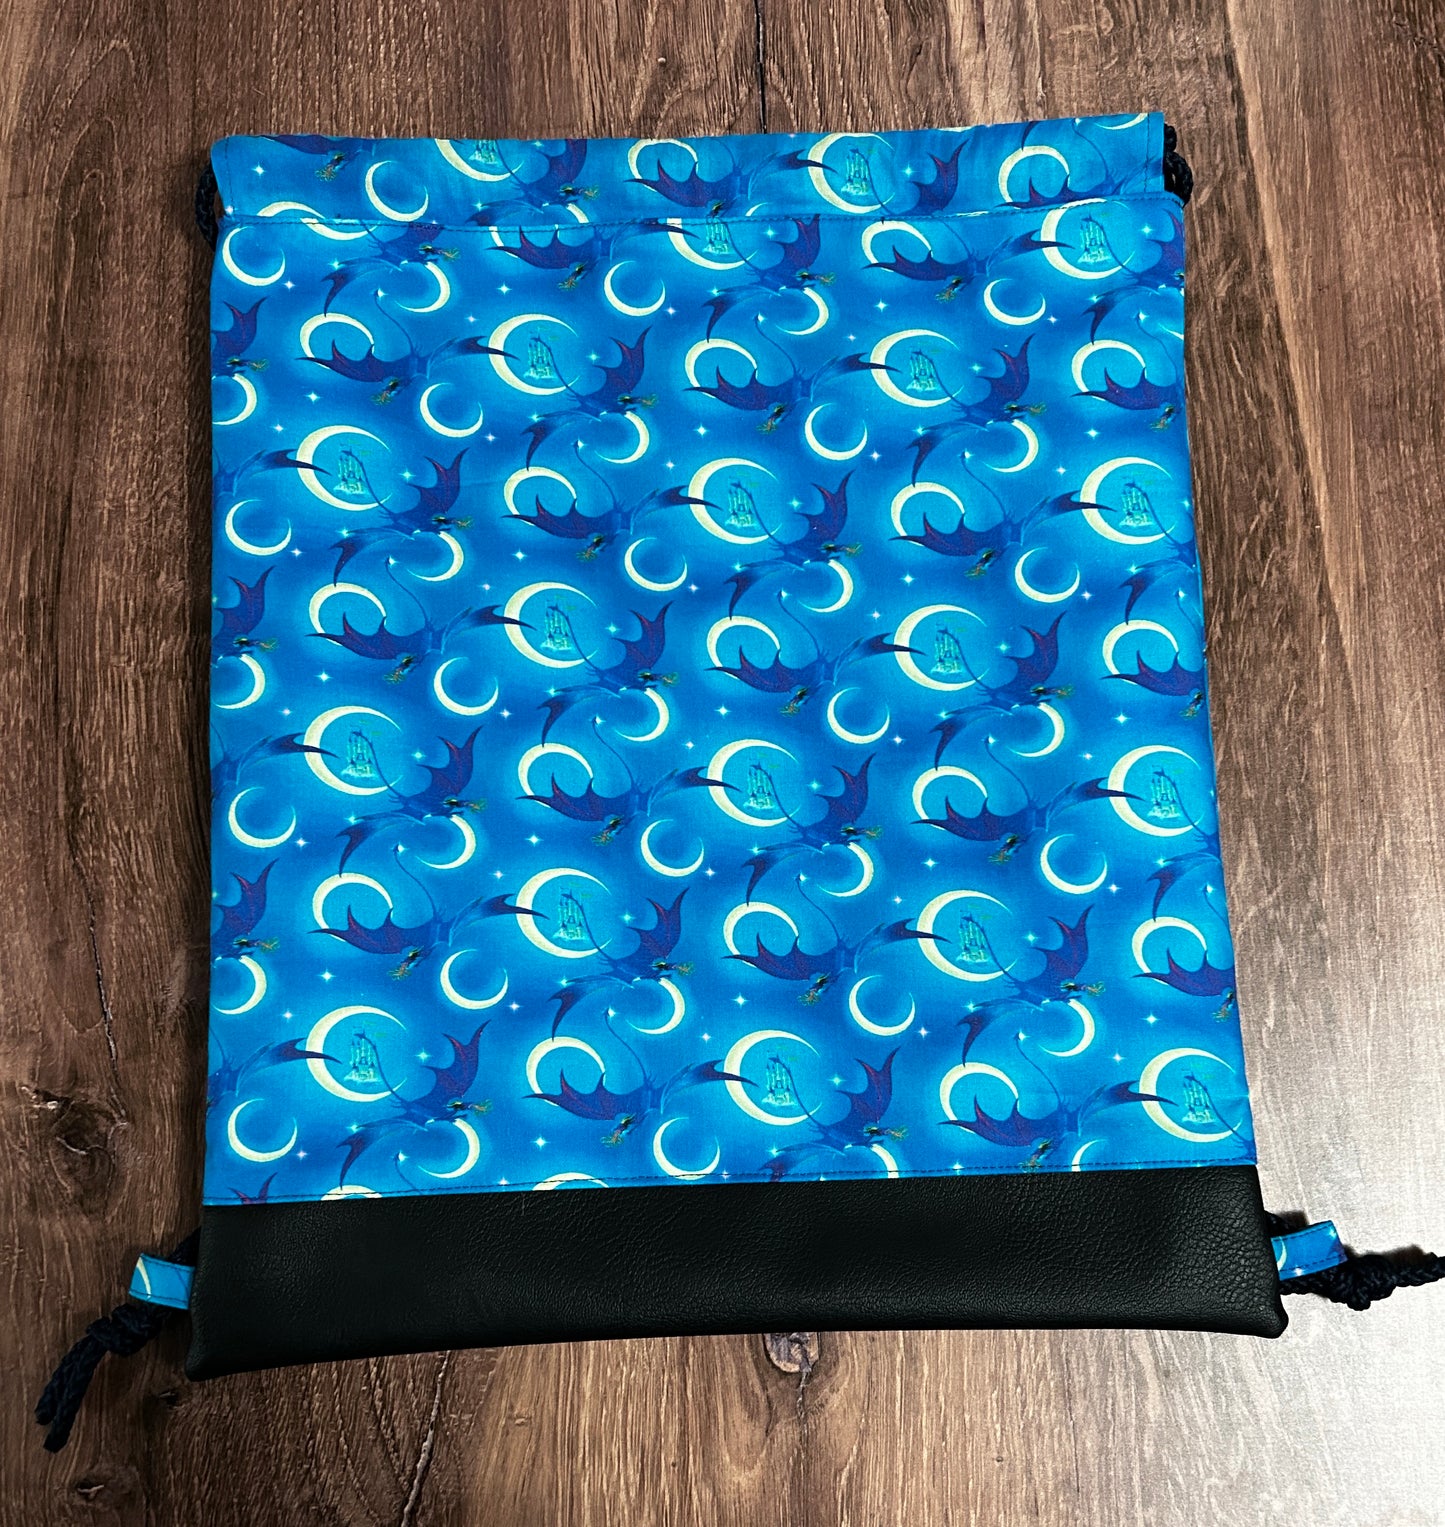 Dragon Drawstring Bag - Handmade Drawstring Bag – Drawstring Backpack - On the Go Bag - Overnight Bag